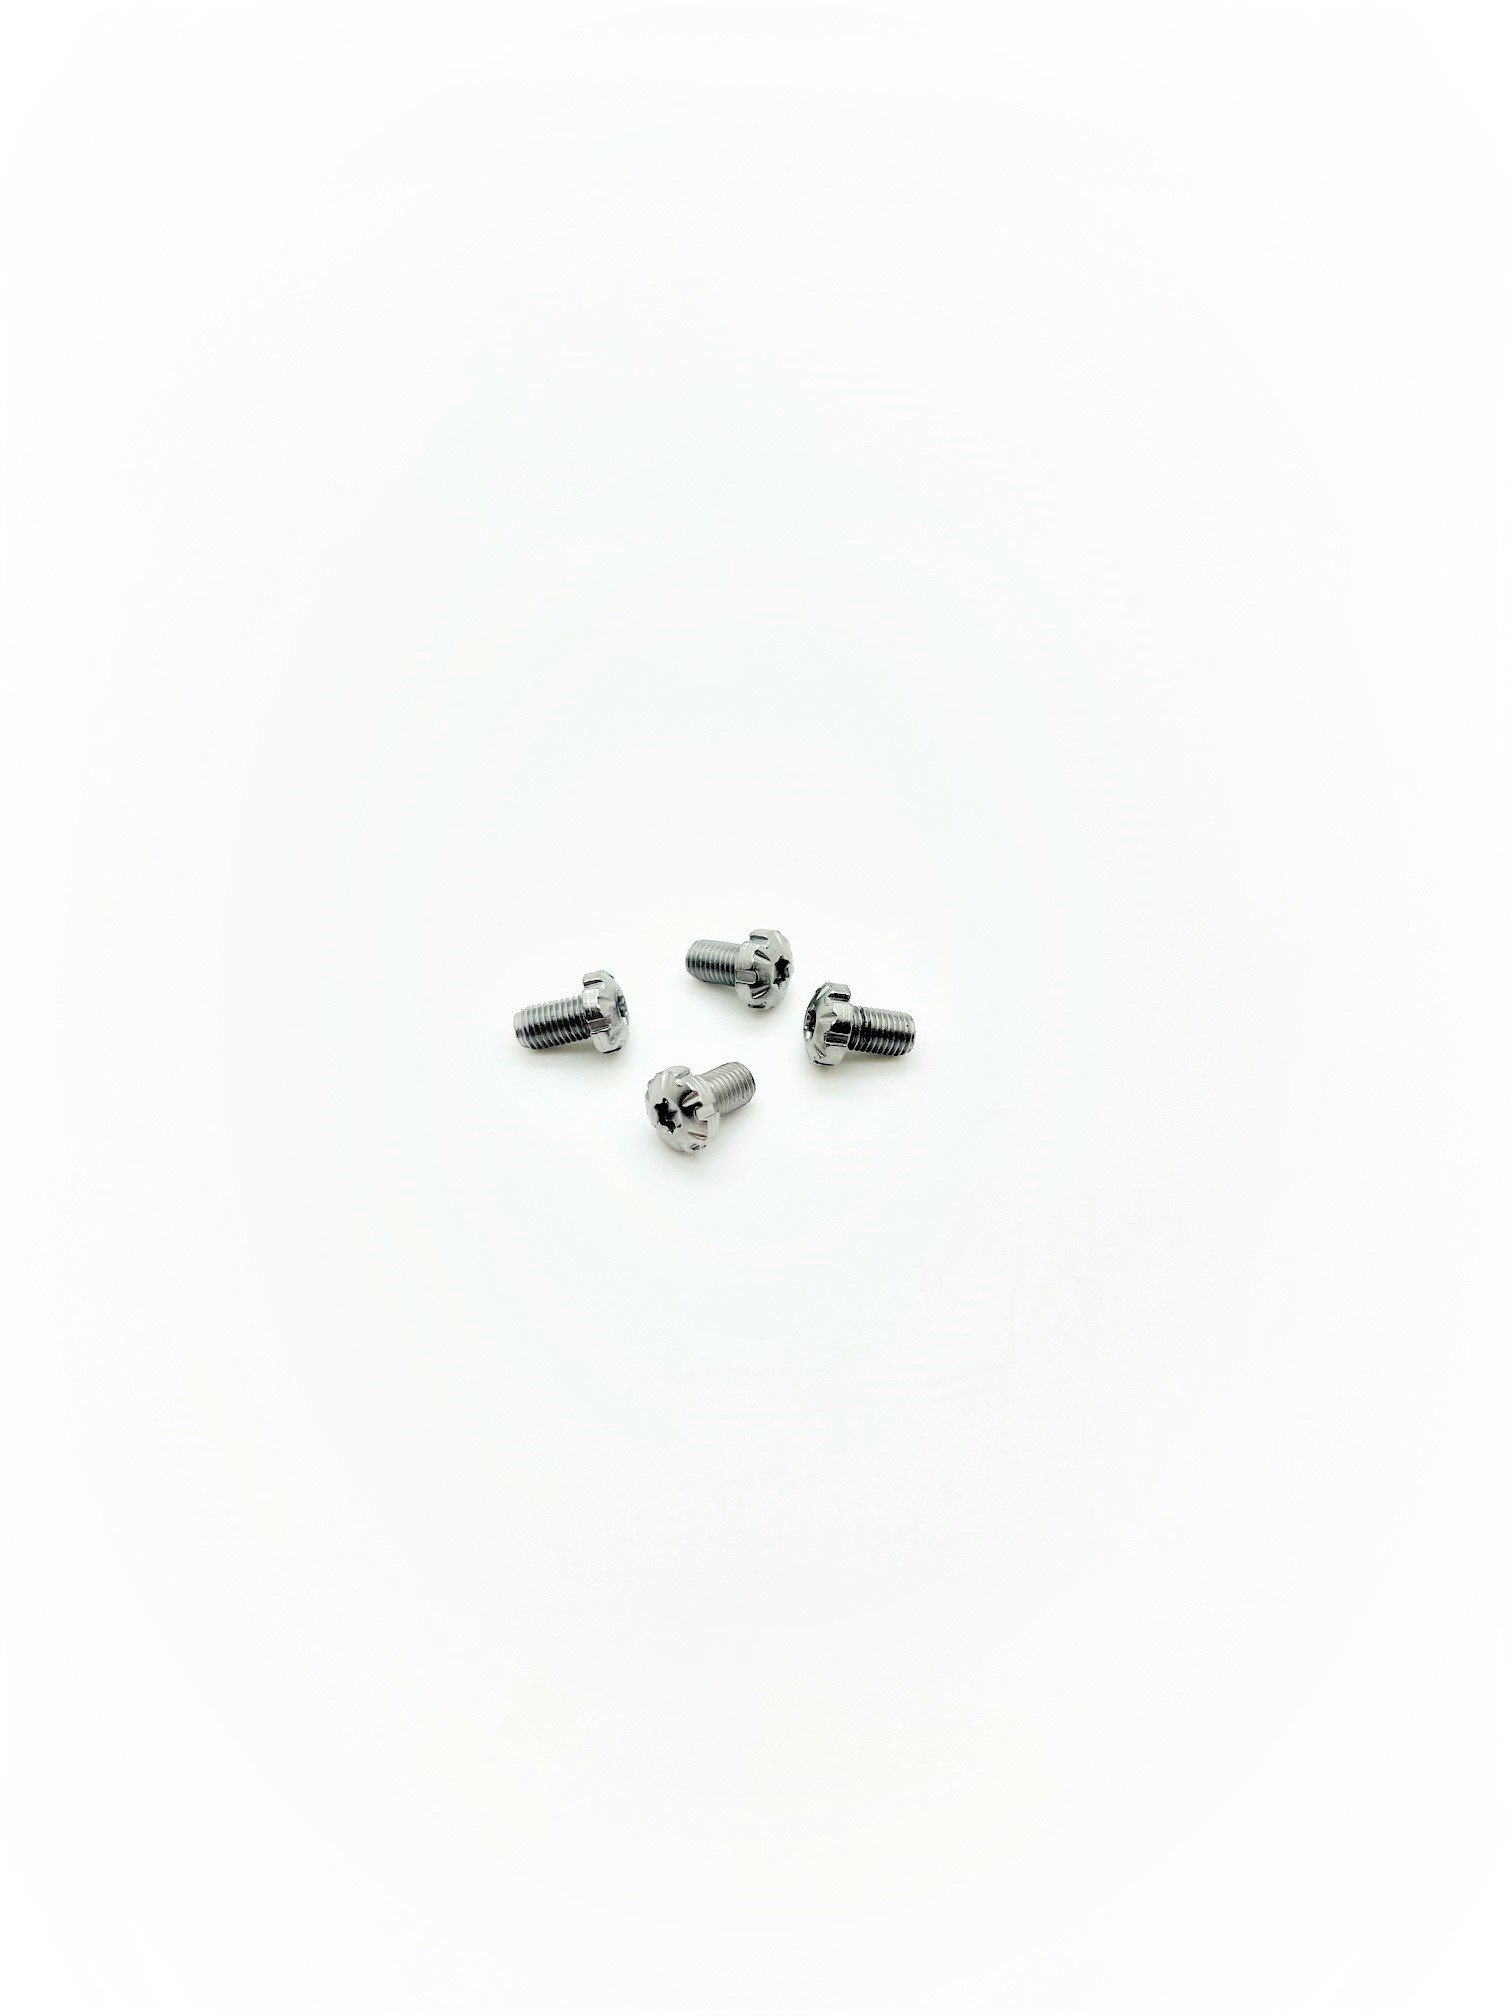 Stainless steel Torx silver 1911 grip screws x4